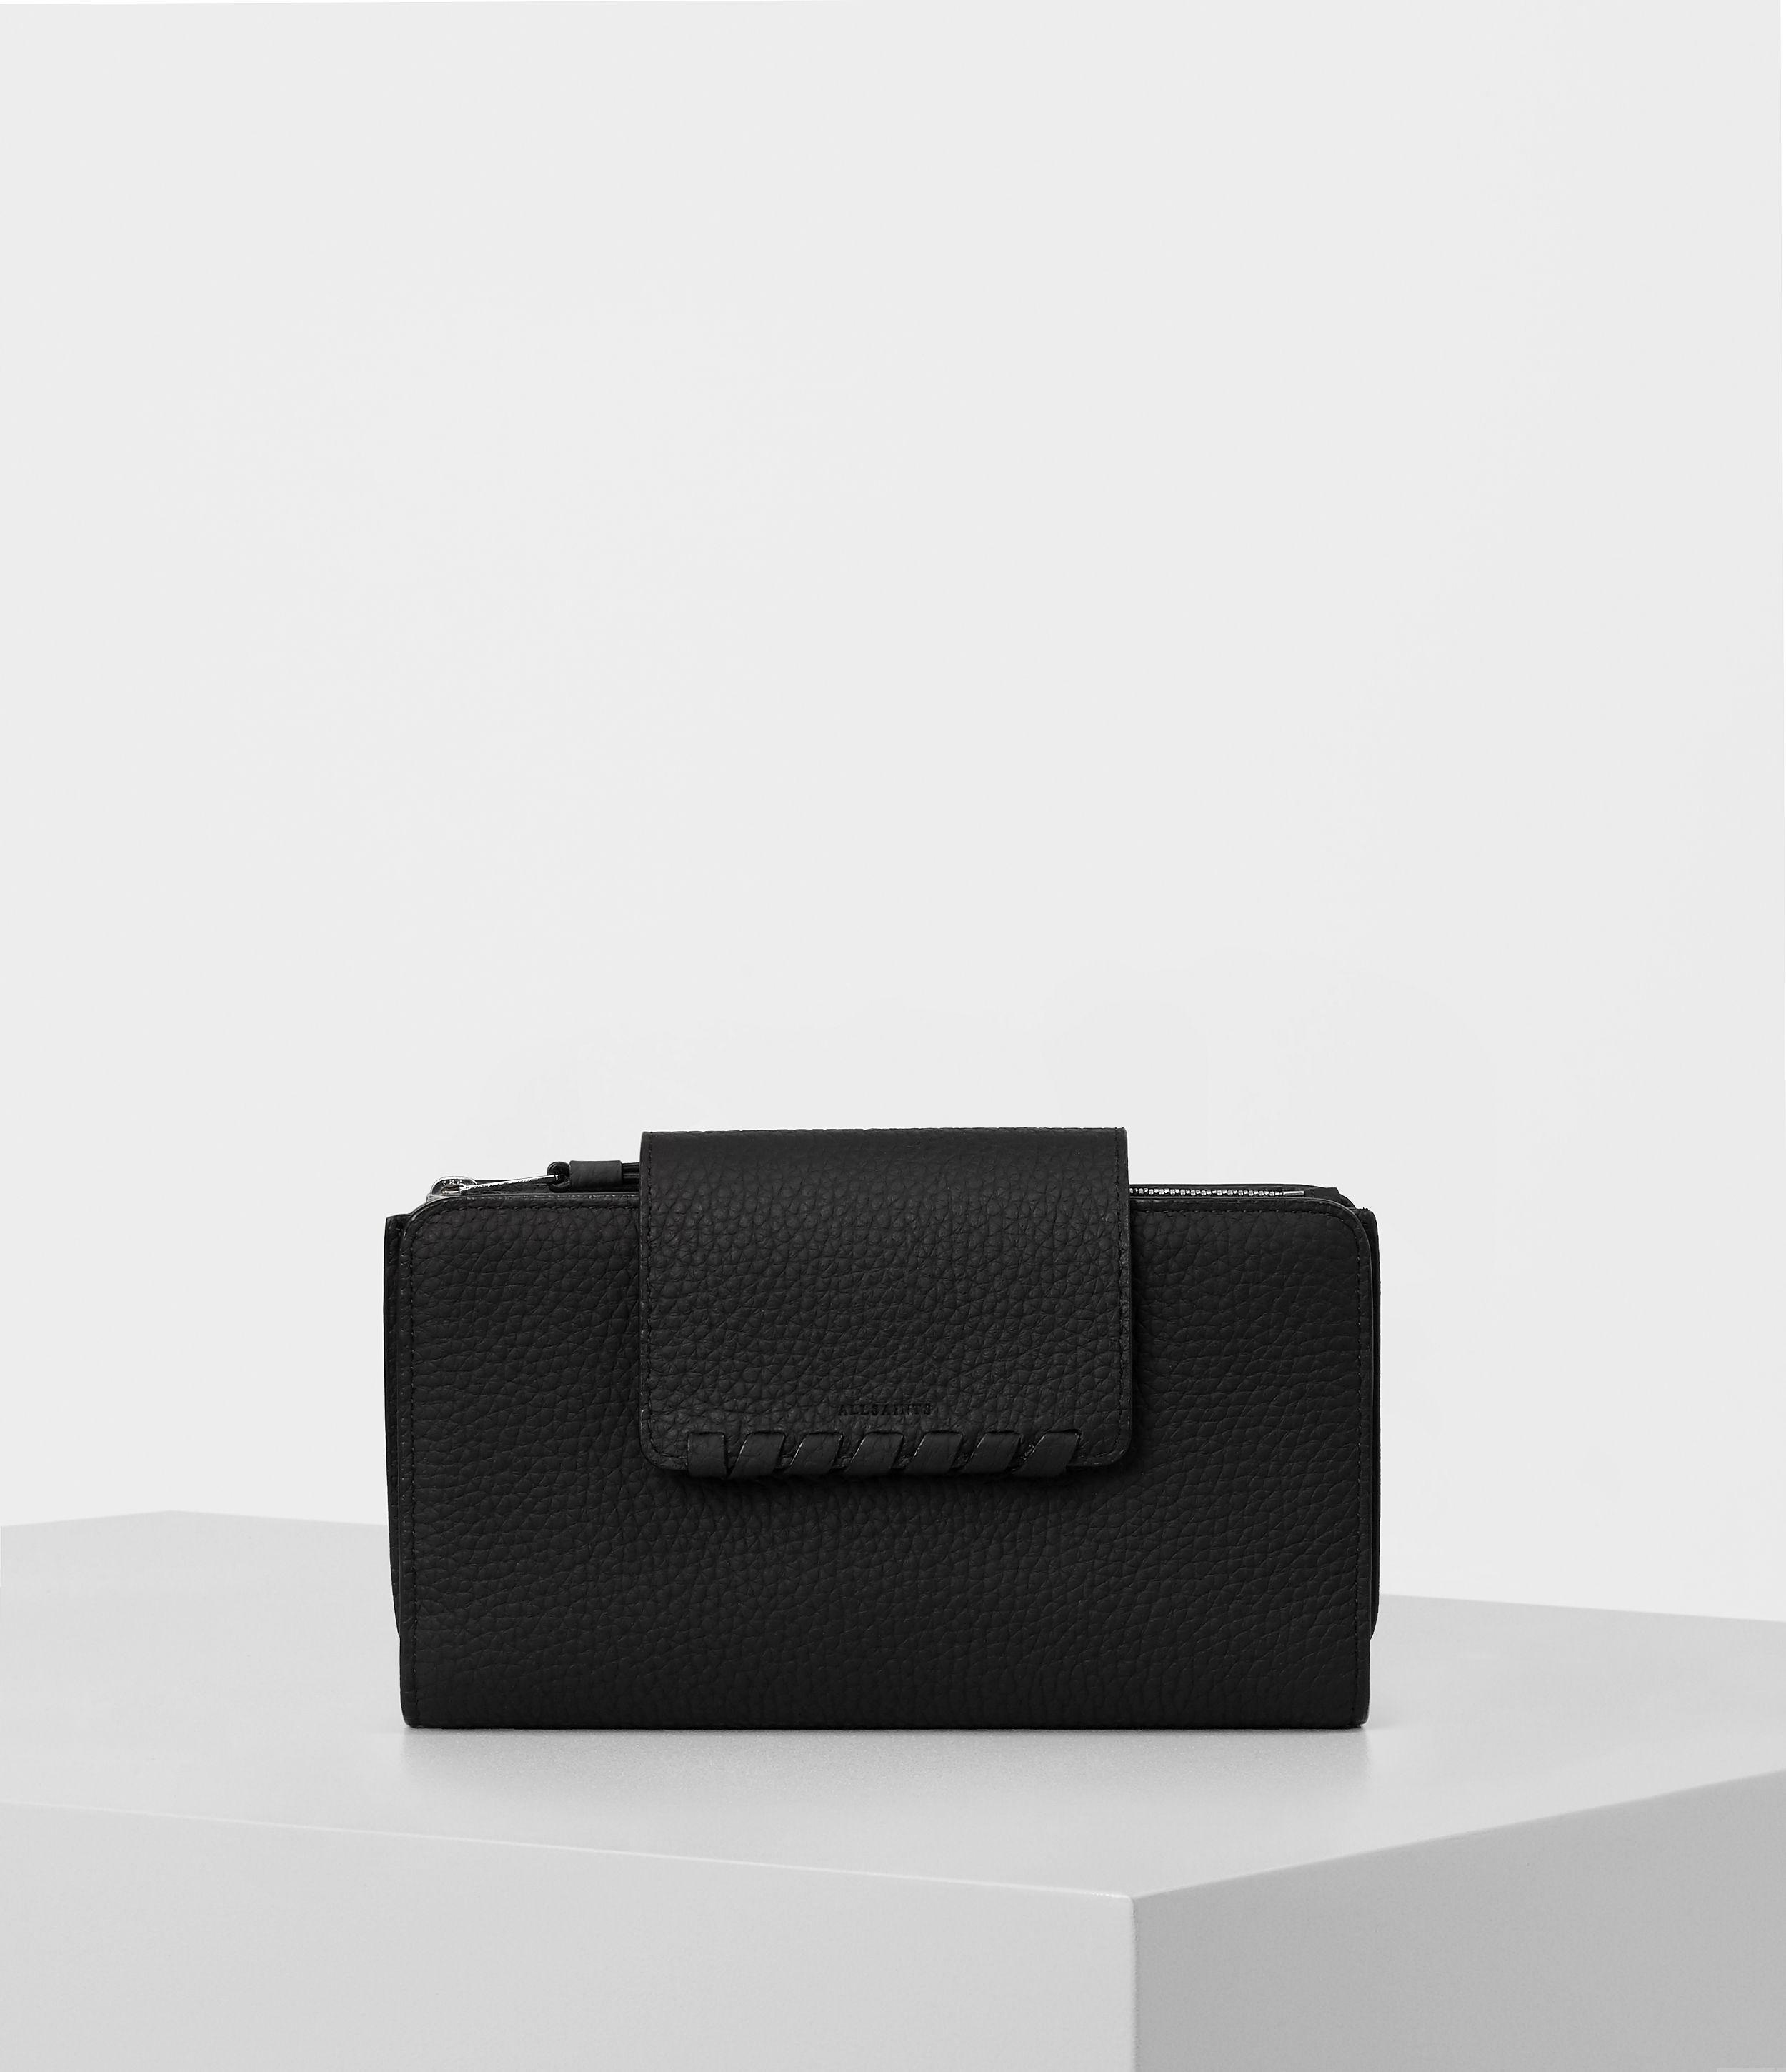 AllSaints Kita Japanese Leather Wallet in Black - Lyst